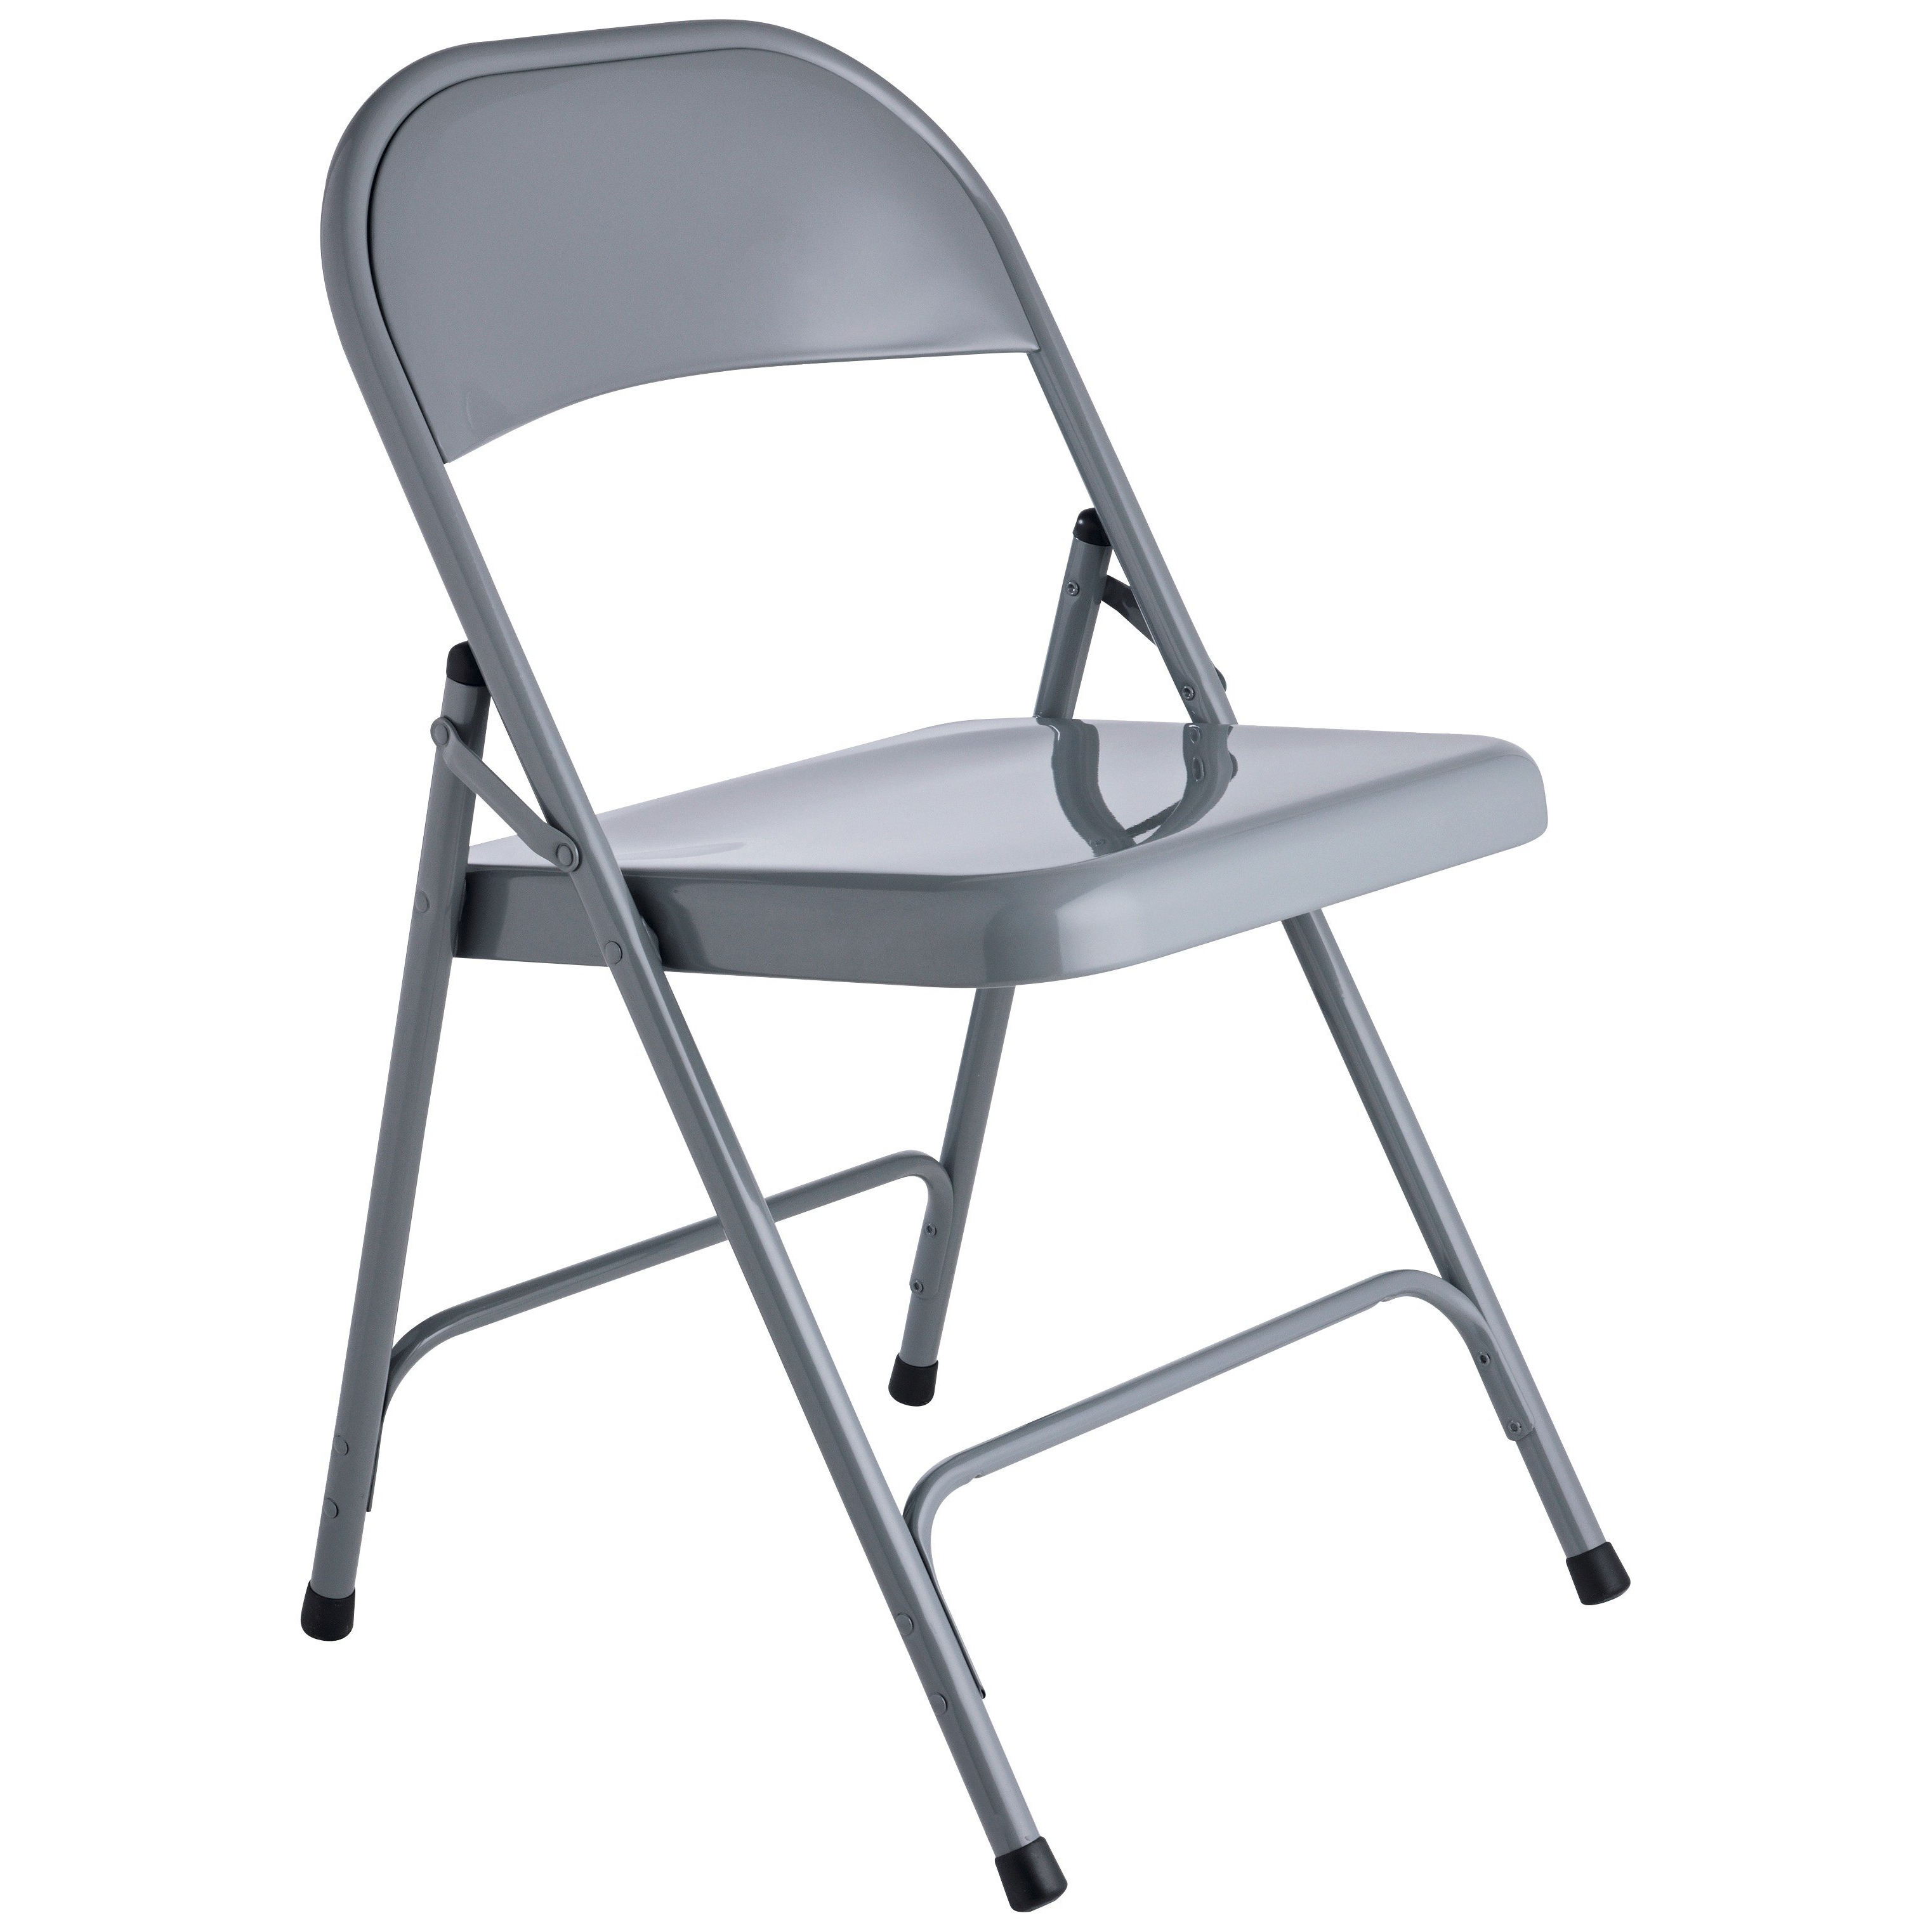 Habitat Macadam Metal Folding Chair - Grey - image 1